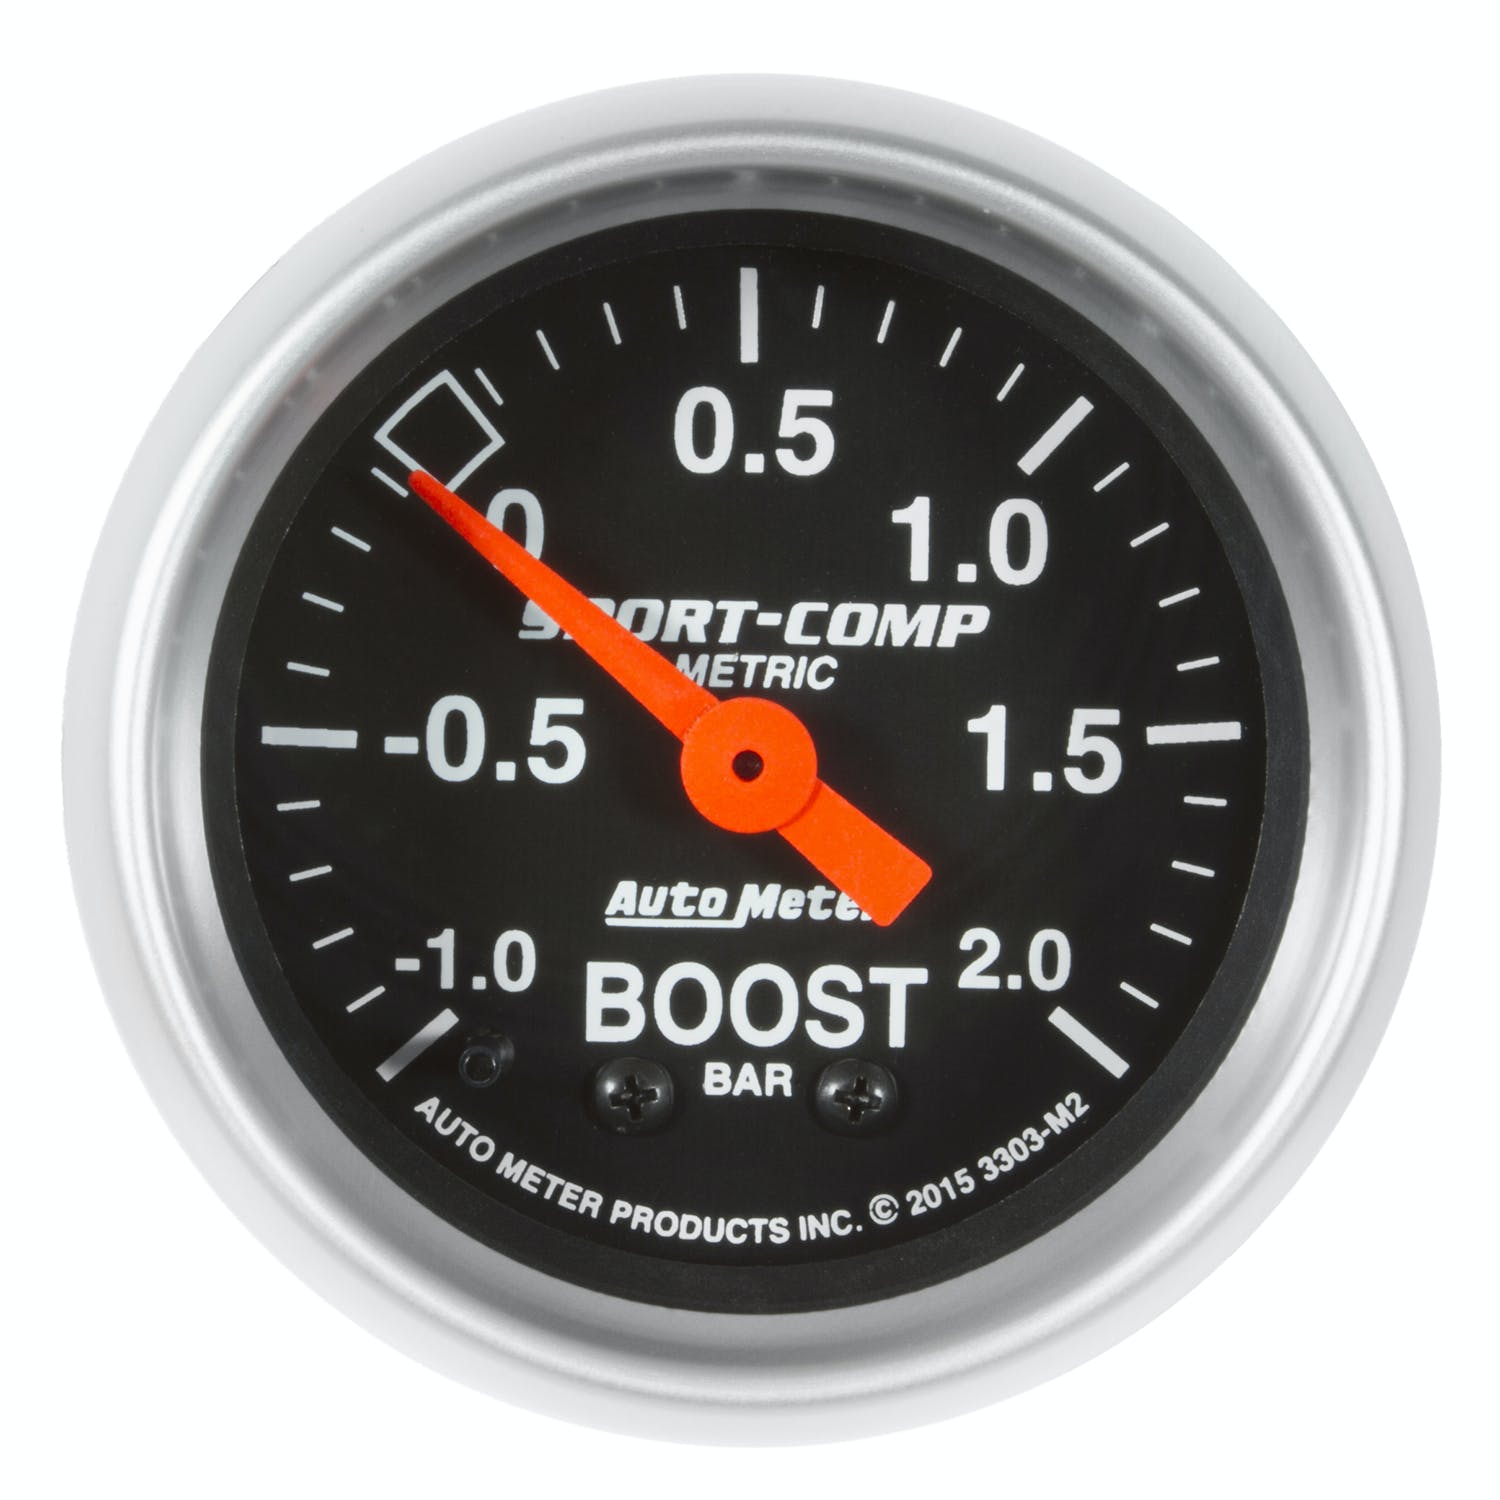 AutoMeter Products 3303-M2 Vac/Boost Gauge, 2 1/16, -1 - +2 Bar, Mechanical Sport Comp